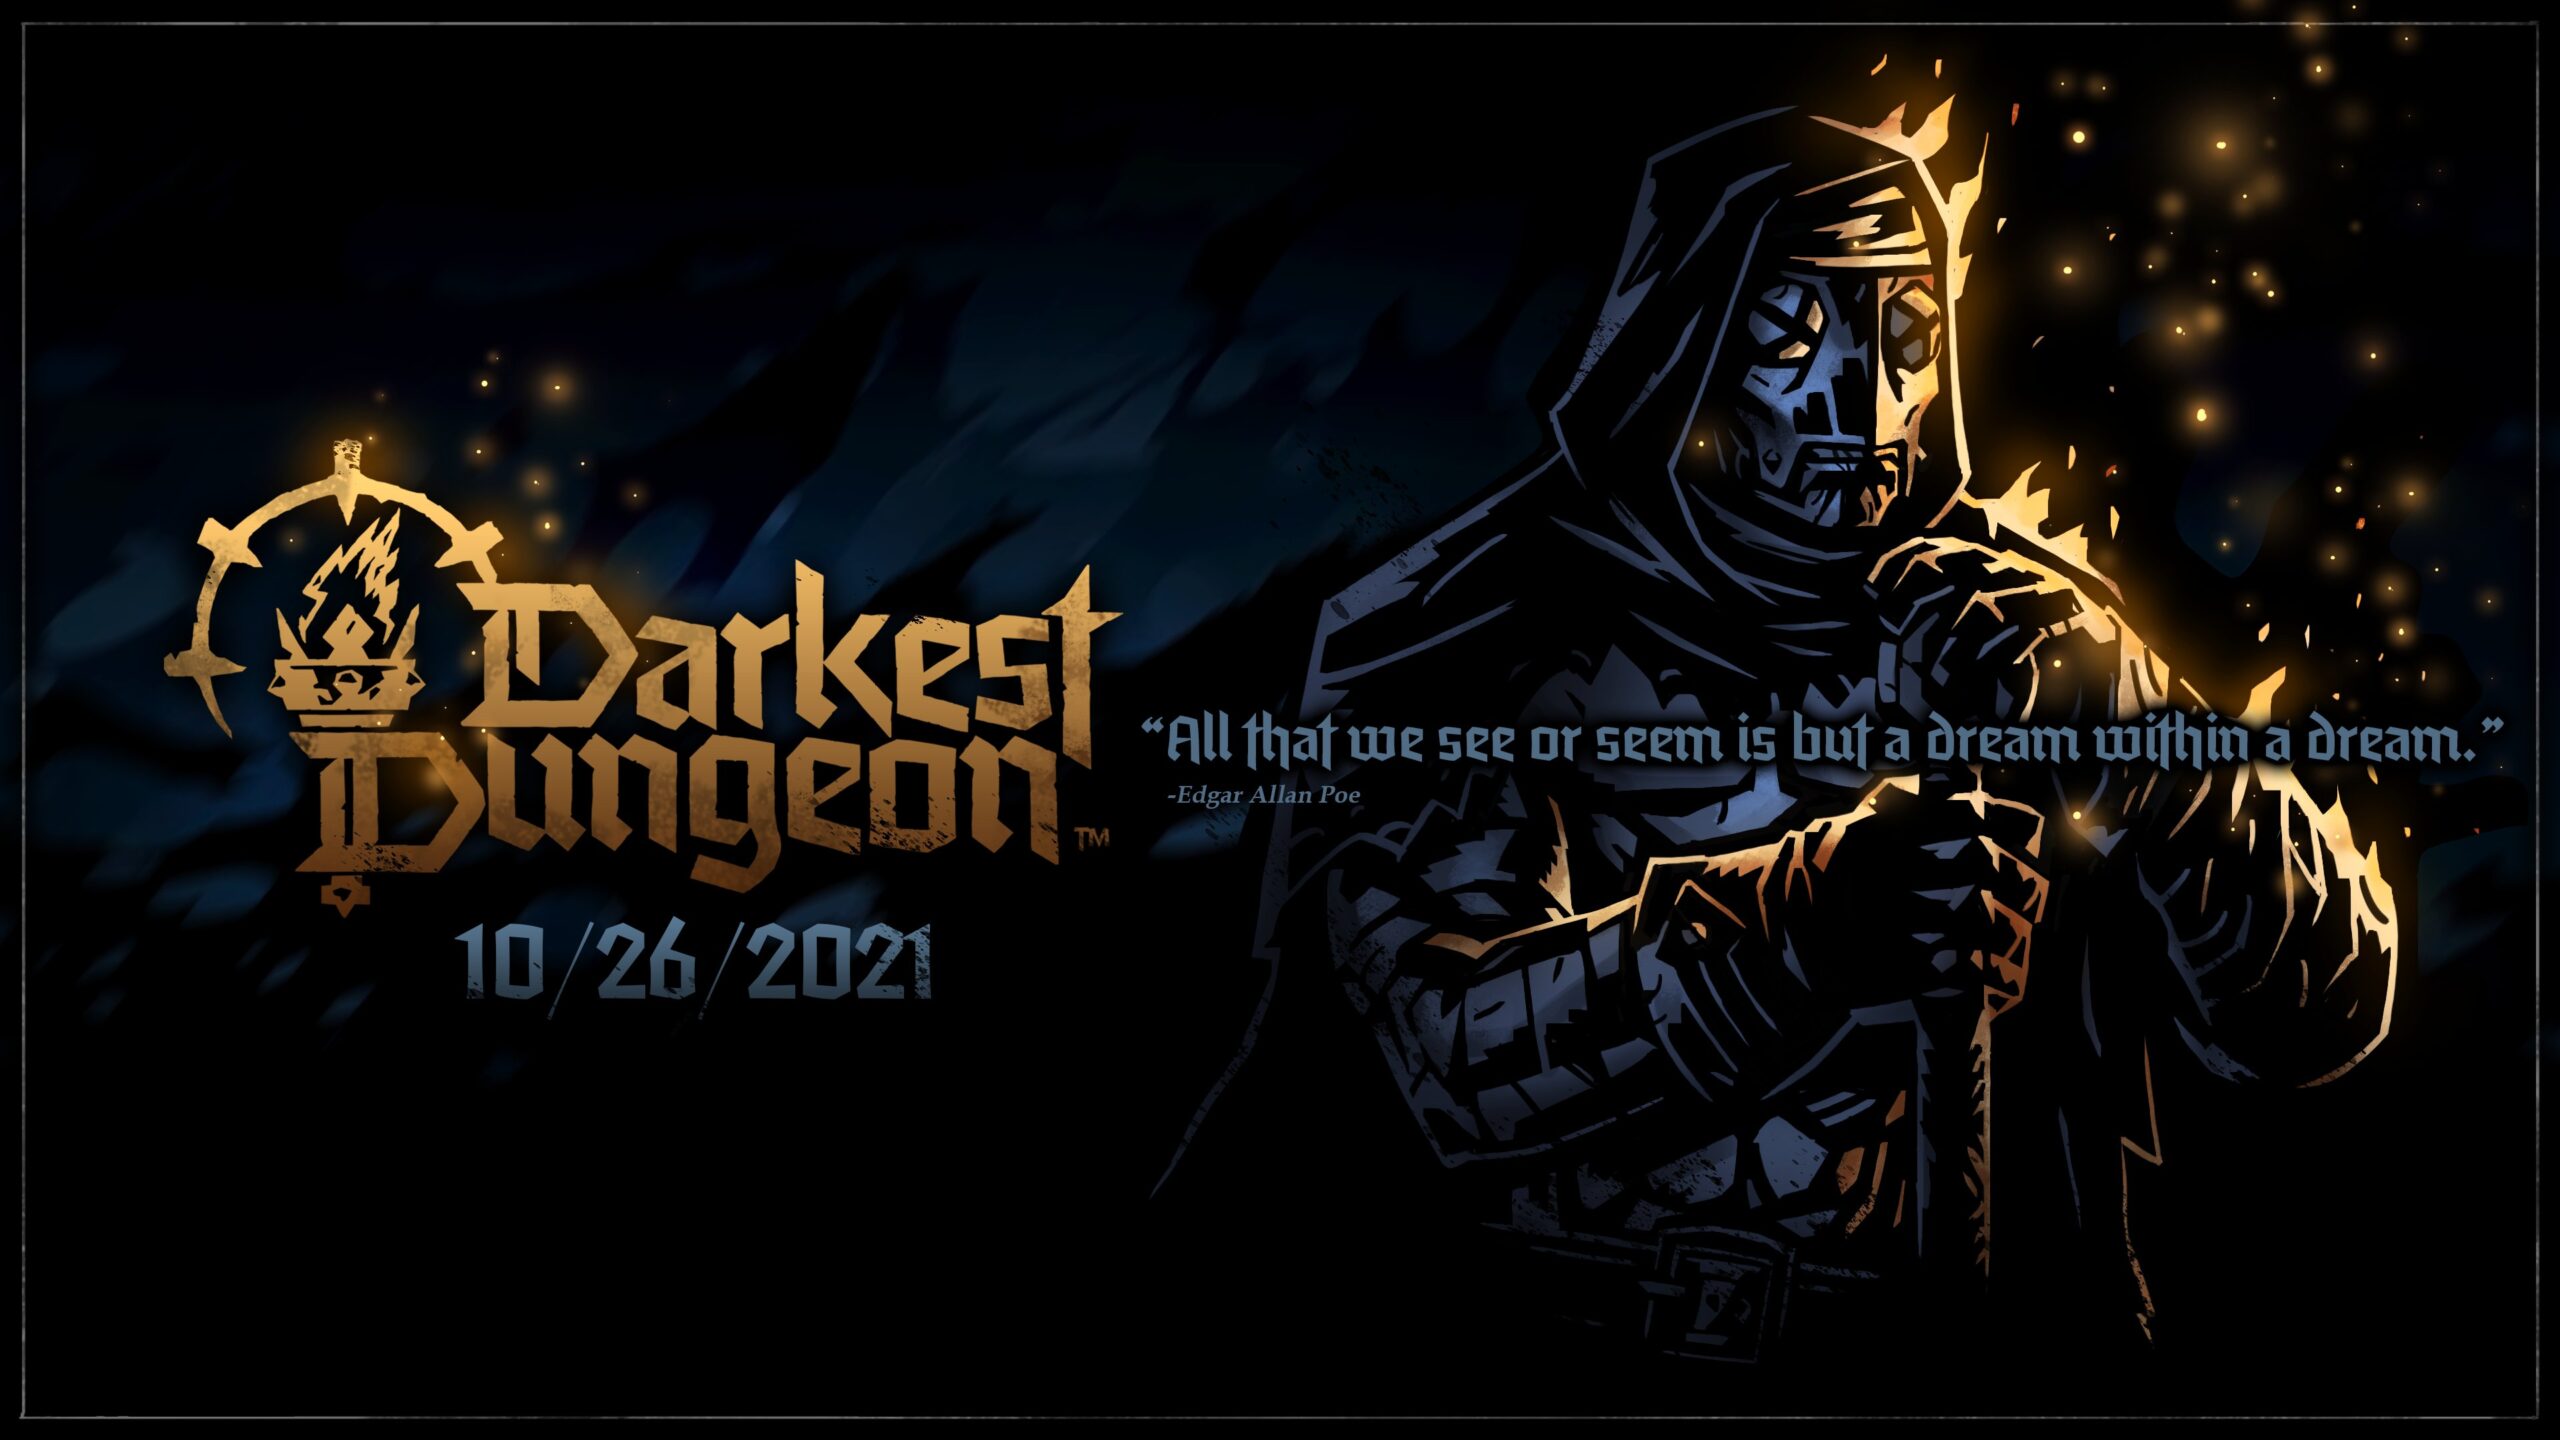 Darkest Dungeon II launches October 26